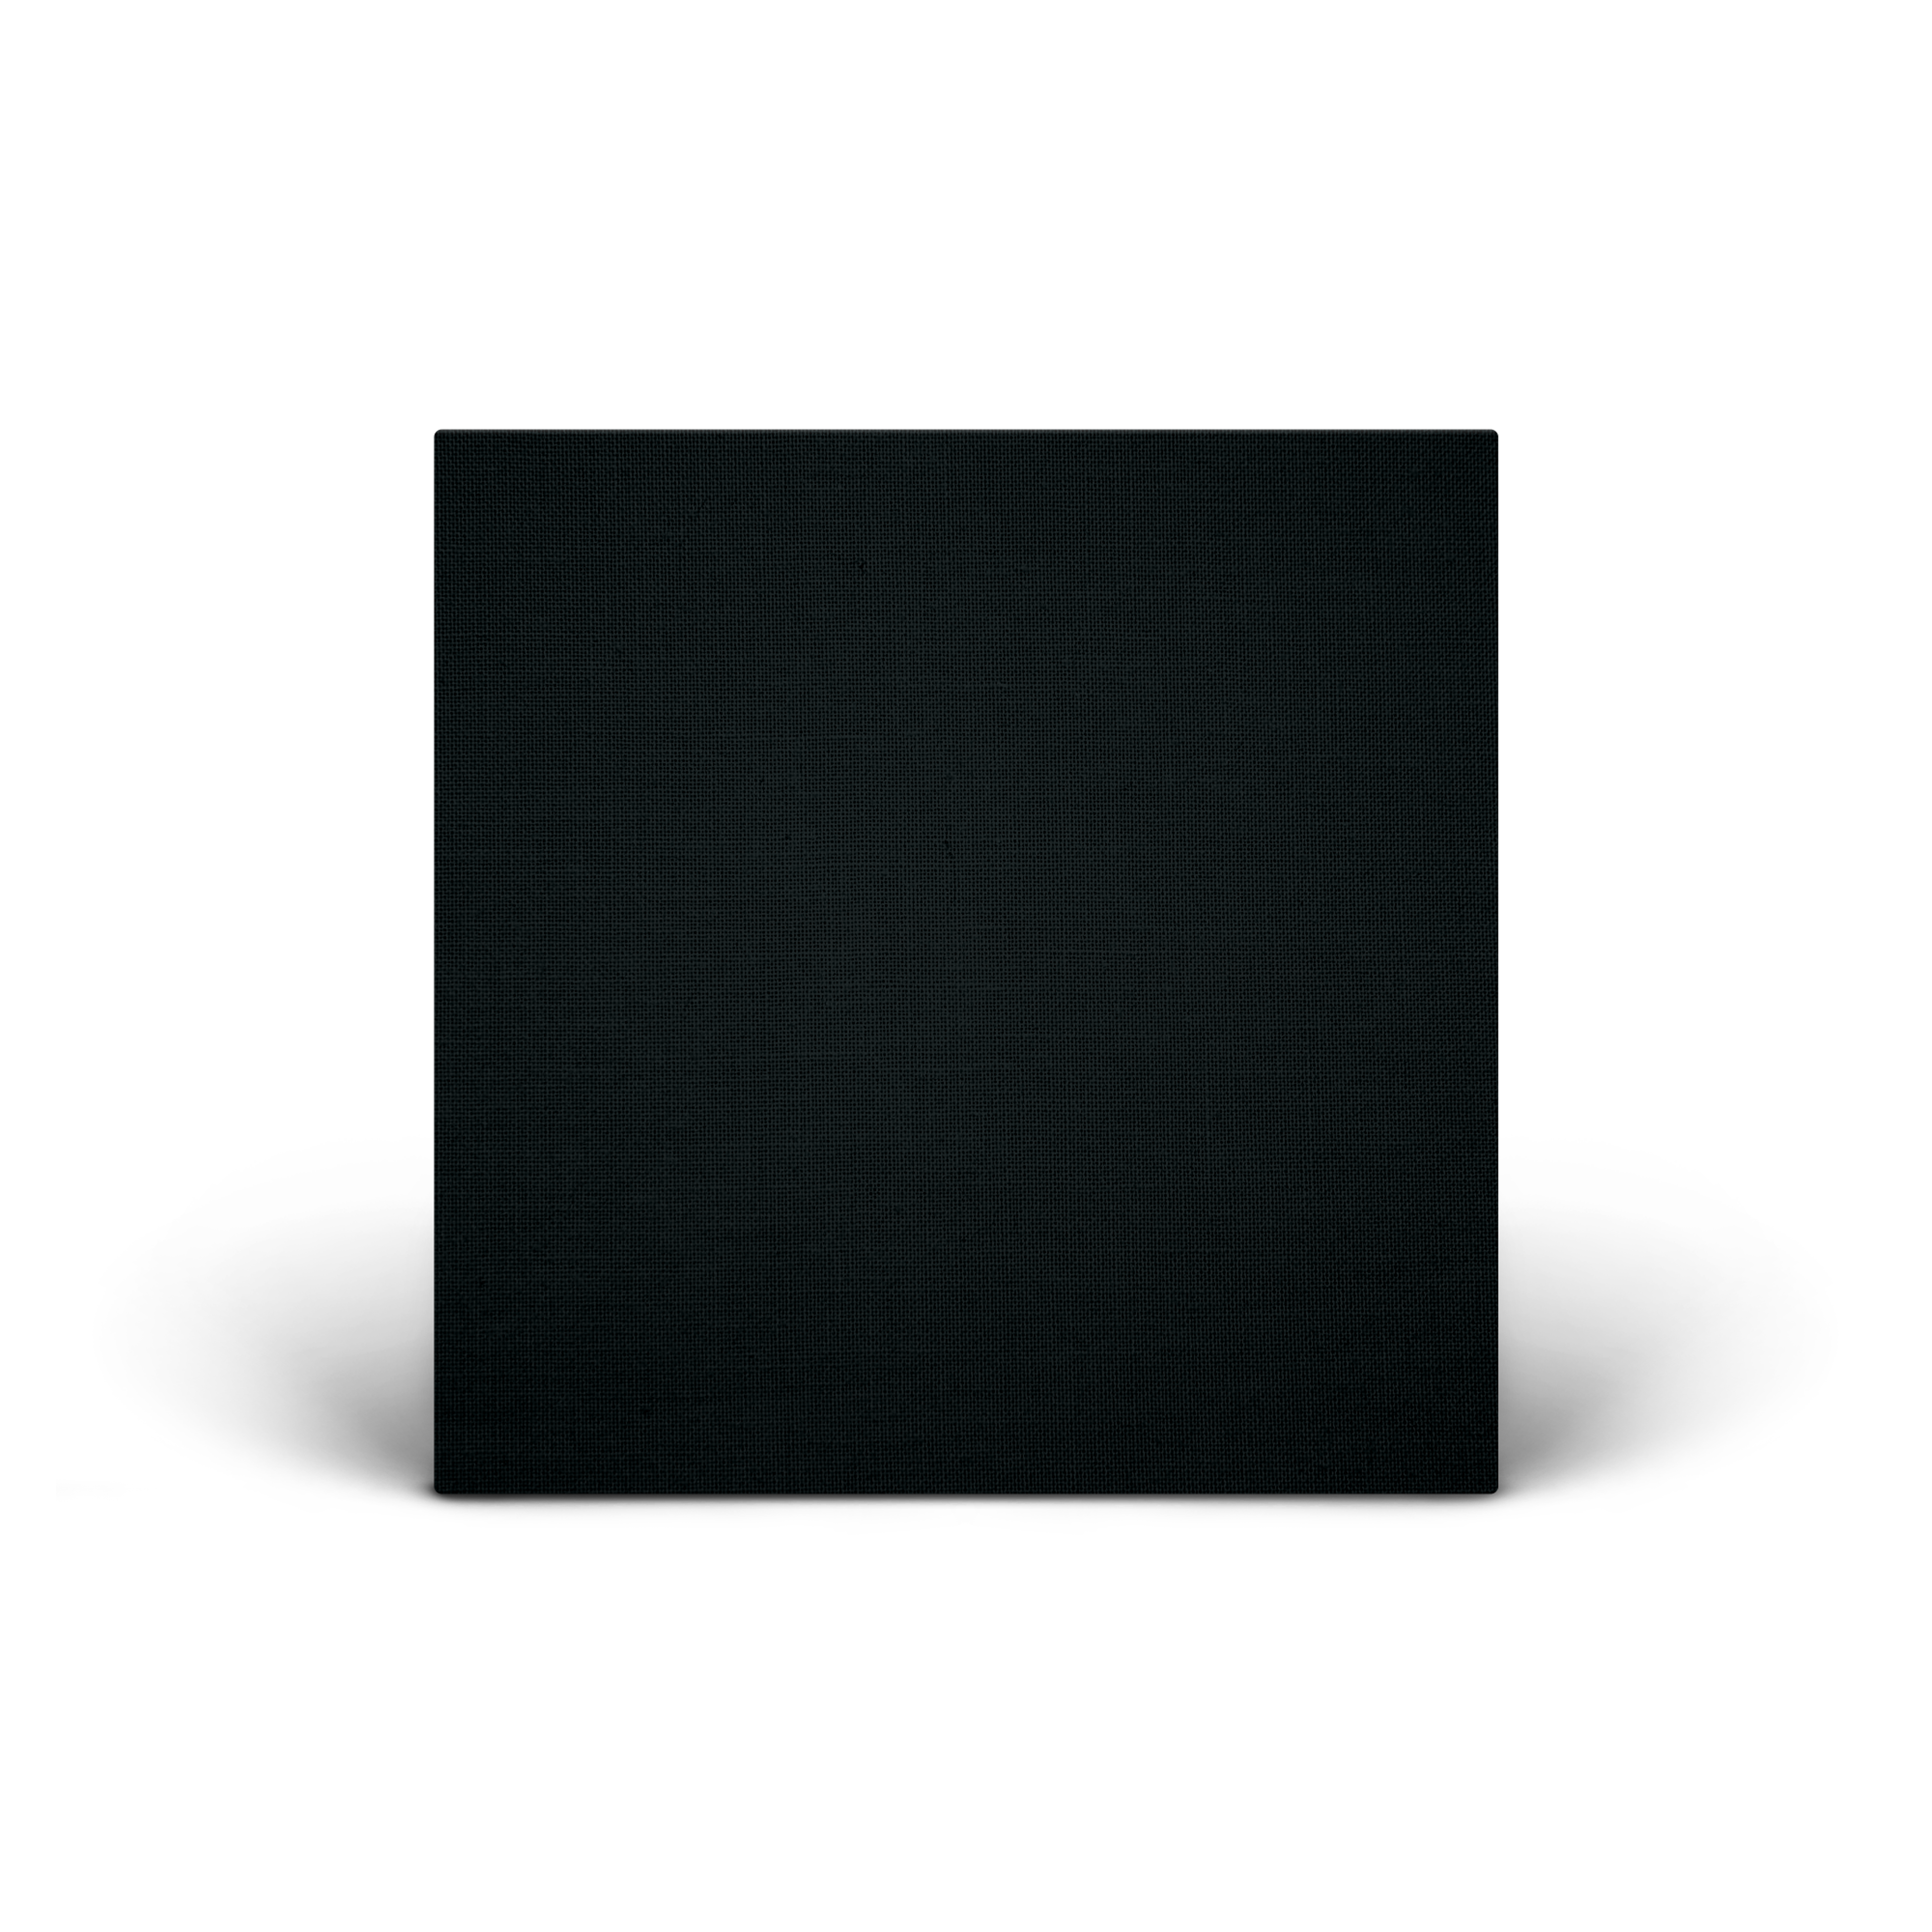 Alternate View 2 of BLACKPINK - THE ALBUM by Jennifer Guidi Gallery Vinyl